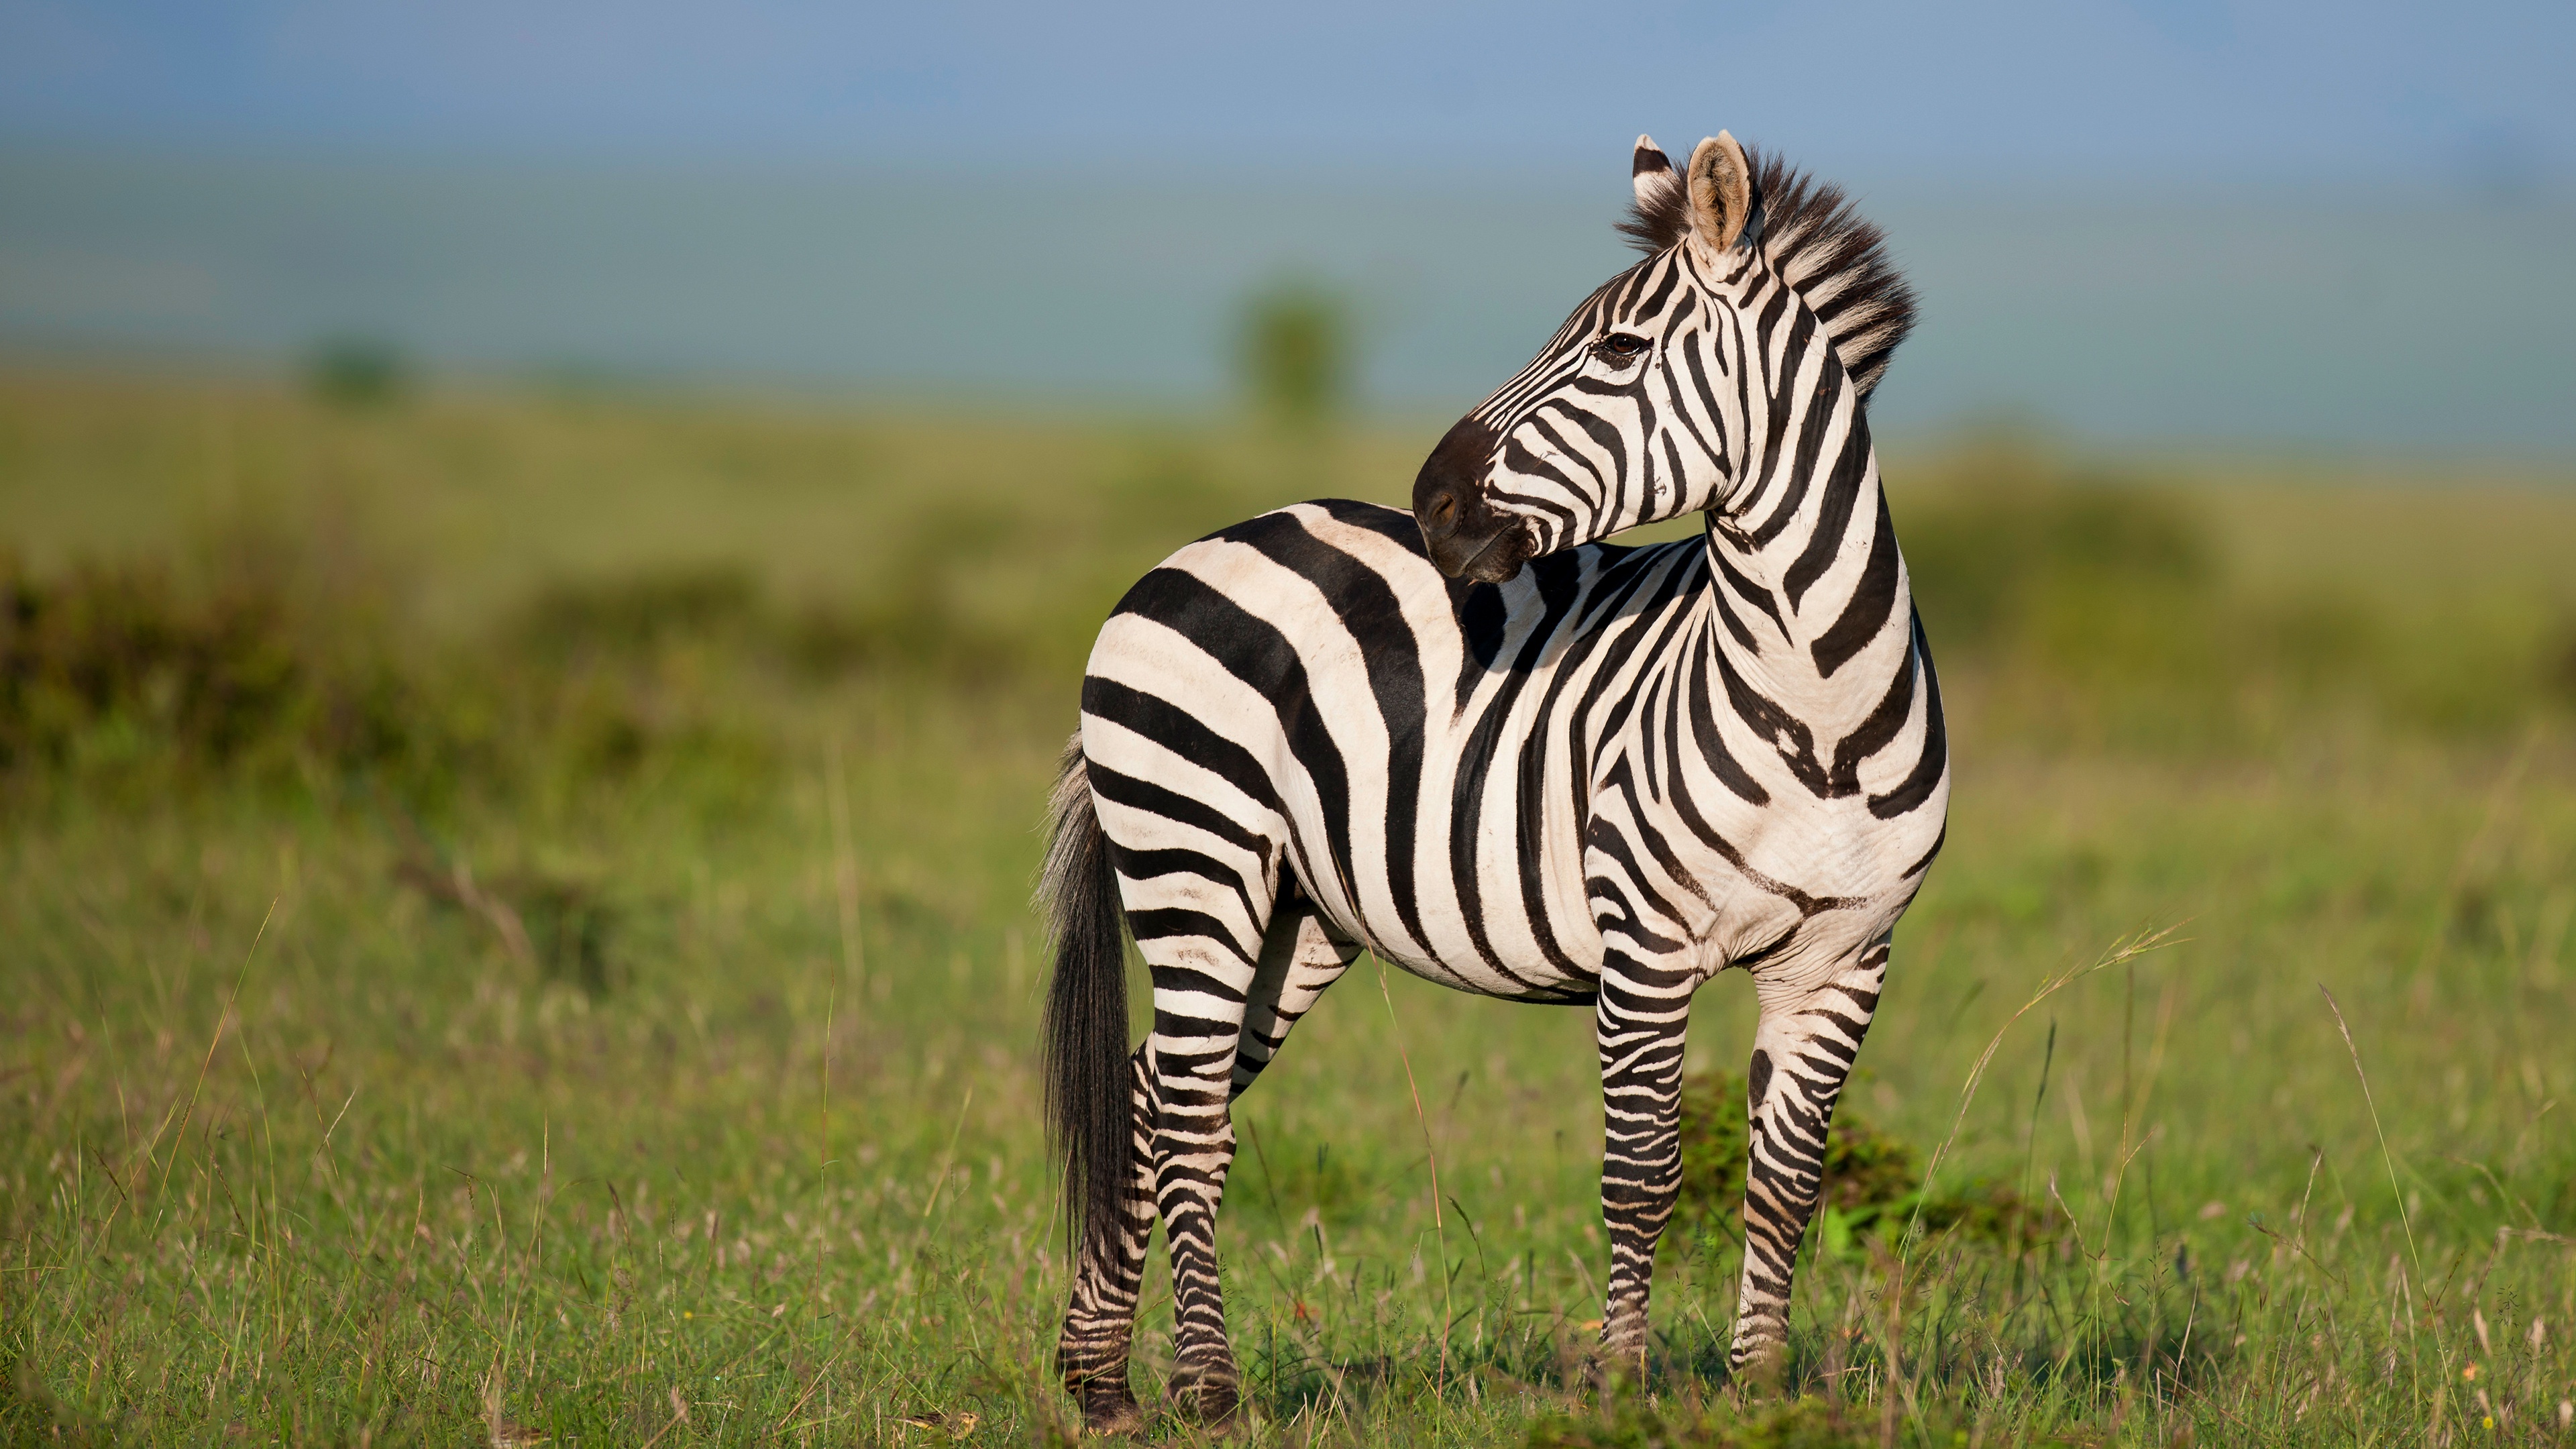 Zebra wallpapers, 4K background images, Majestic creature, Striped beauty, 3840x2160 4K Desktop